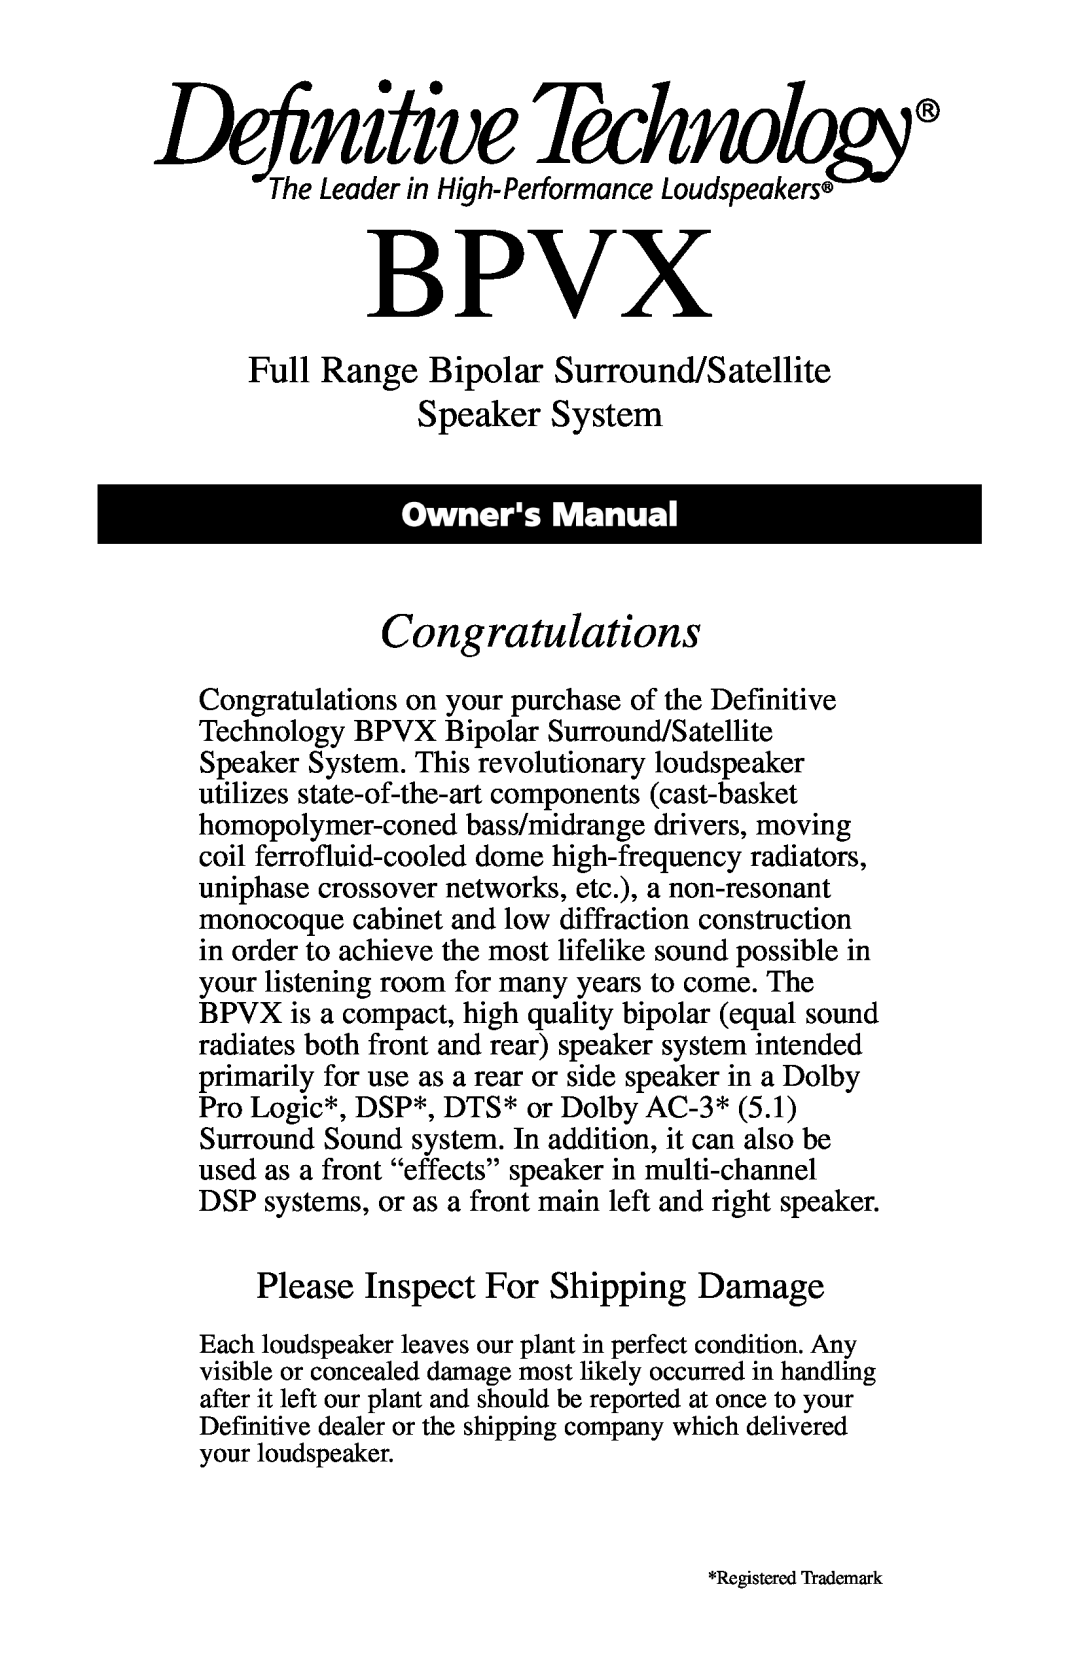 Definitive Technology Full Range Bipolar Surround/Satellite Speaker System manual Please Inspect For Shipping Damage, Bpvx 